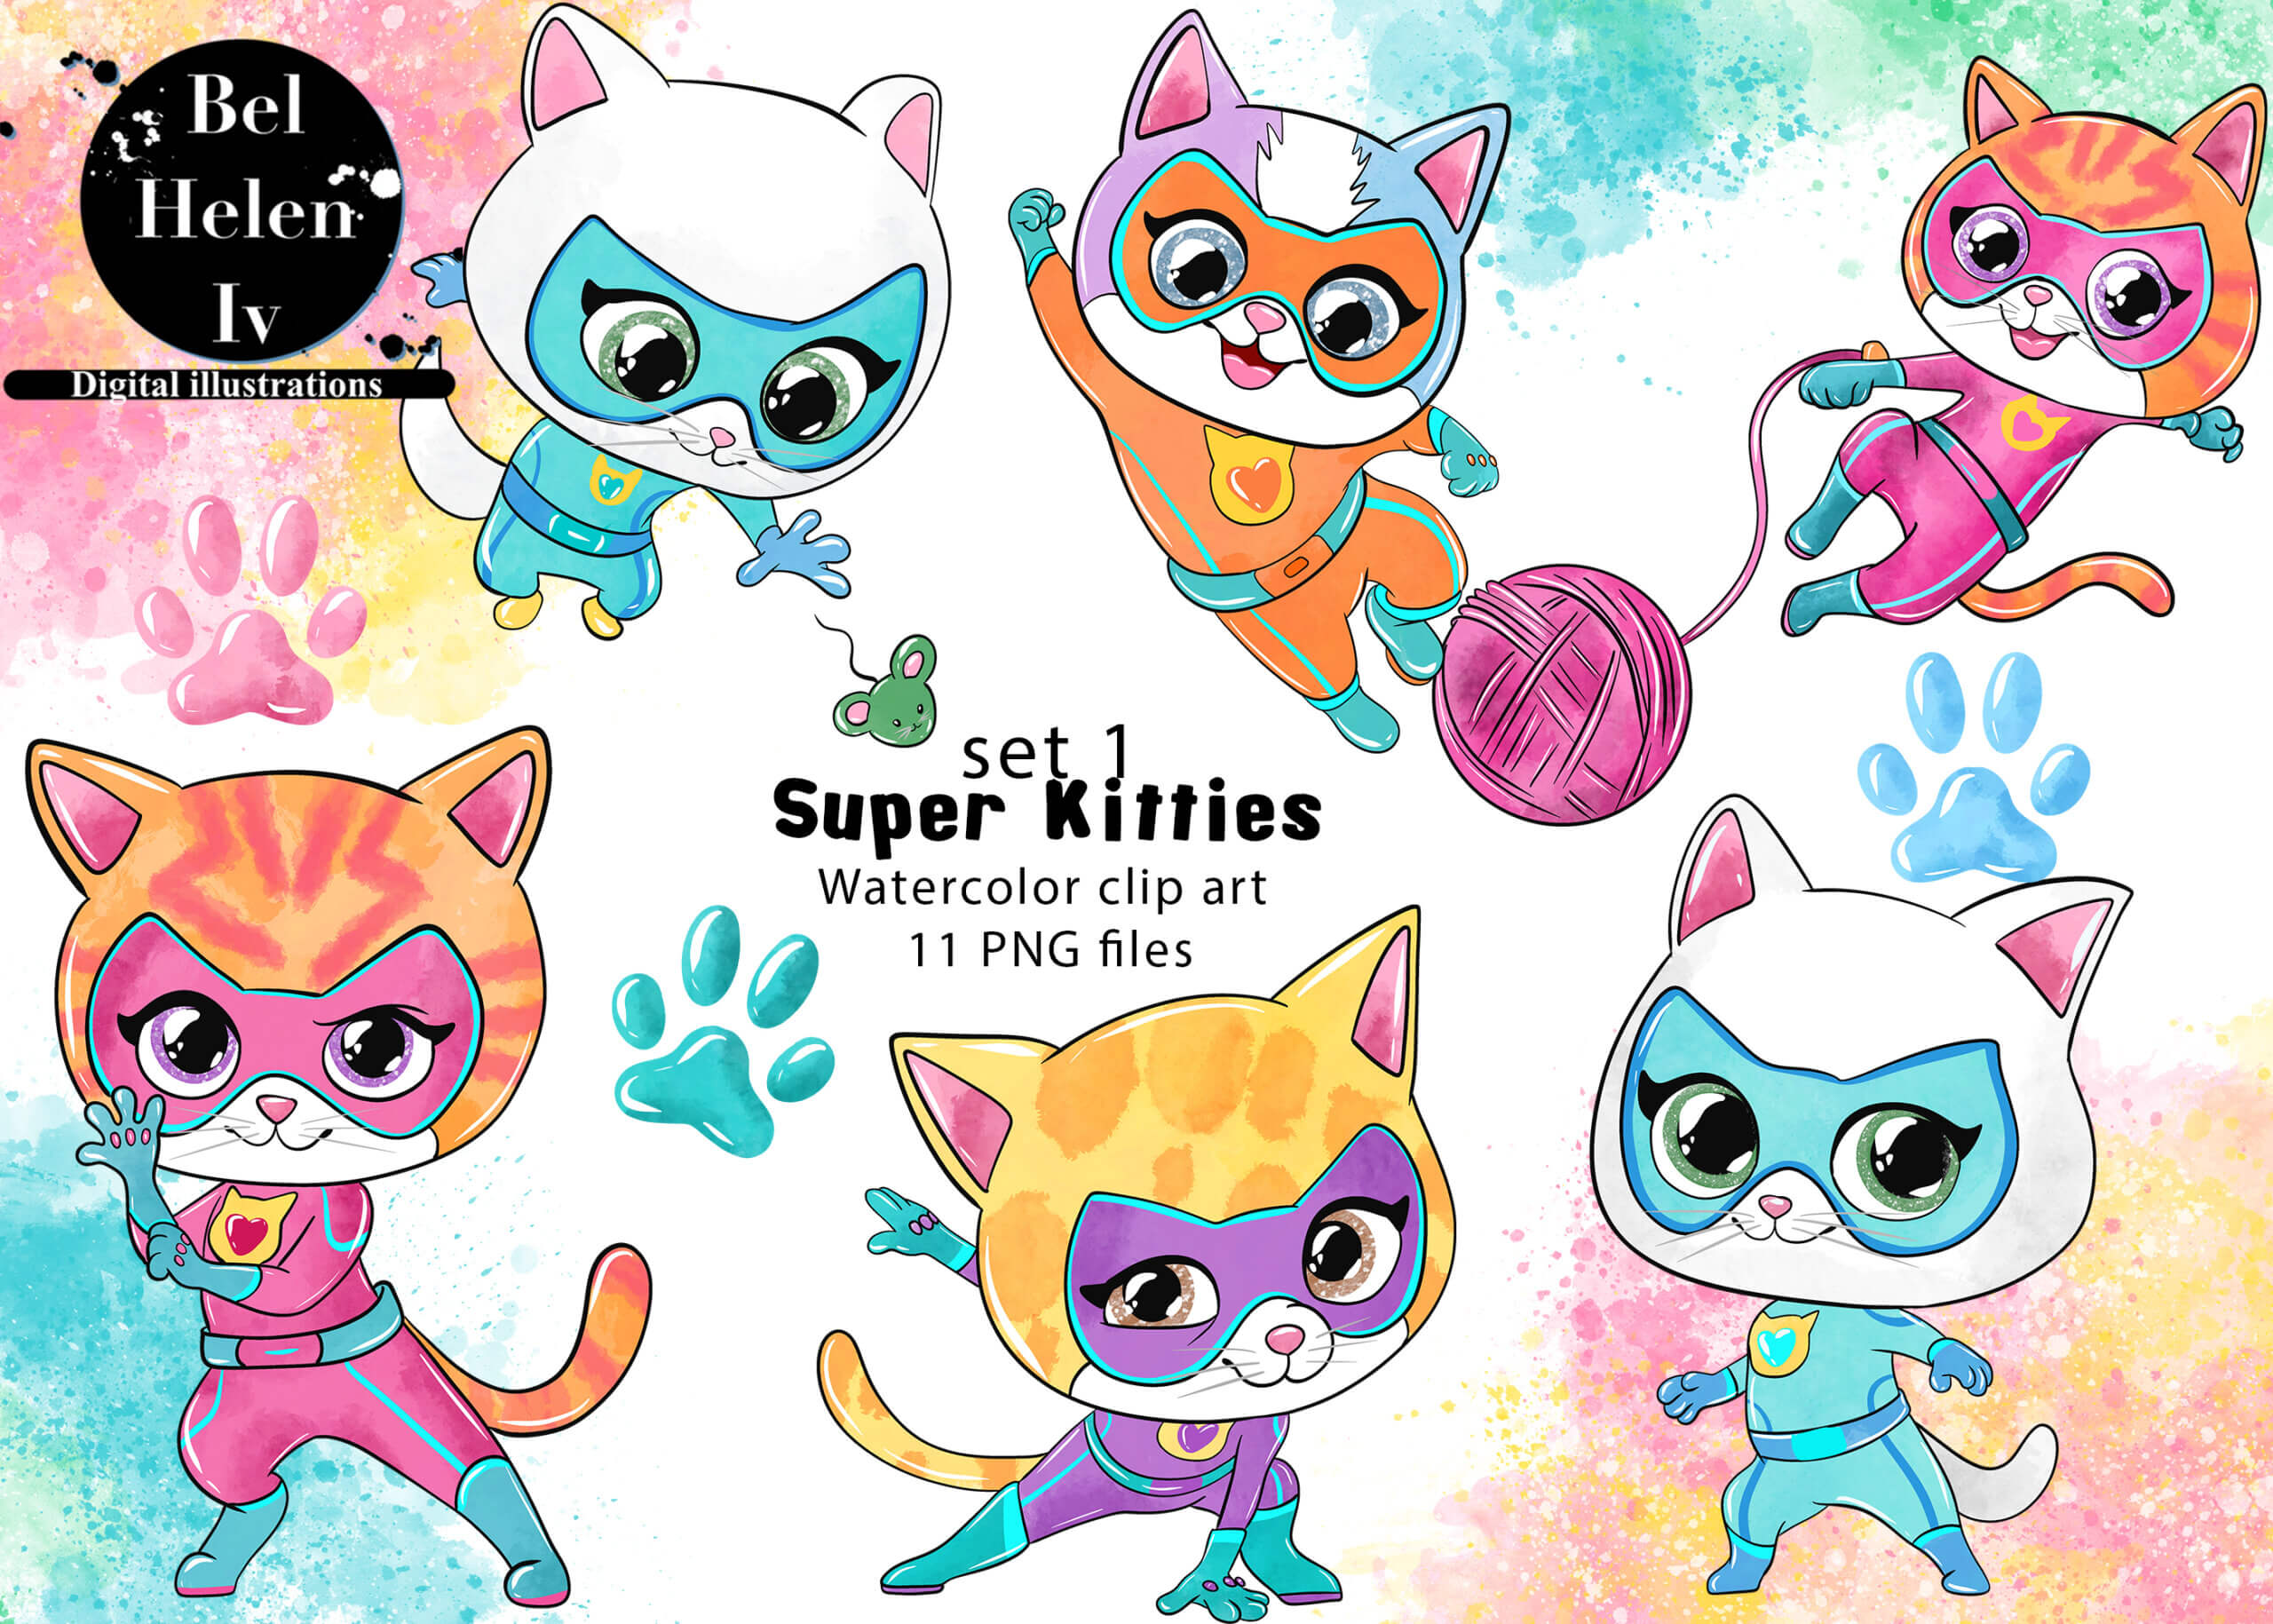 Super Kitties set 1